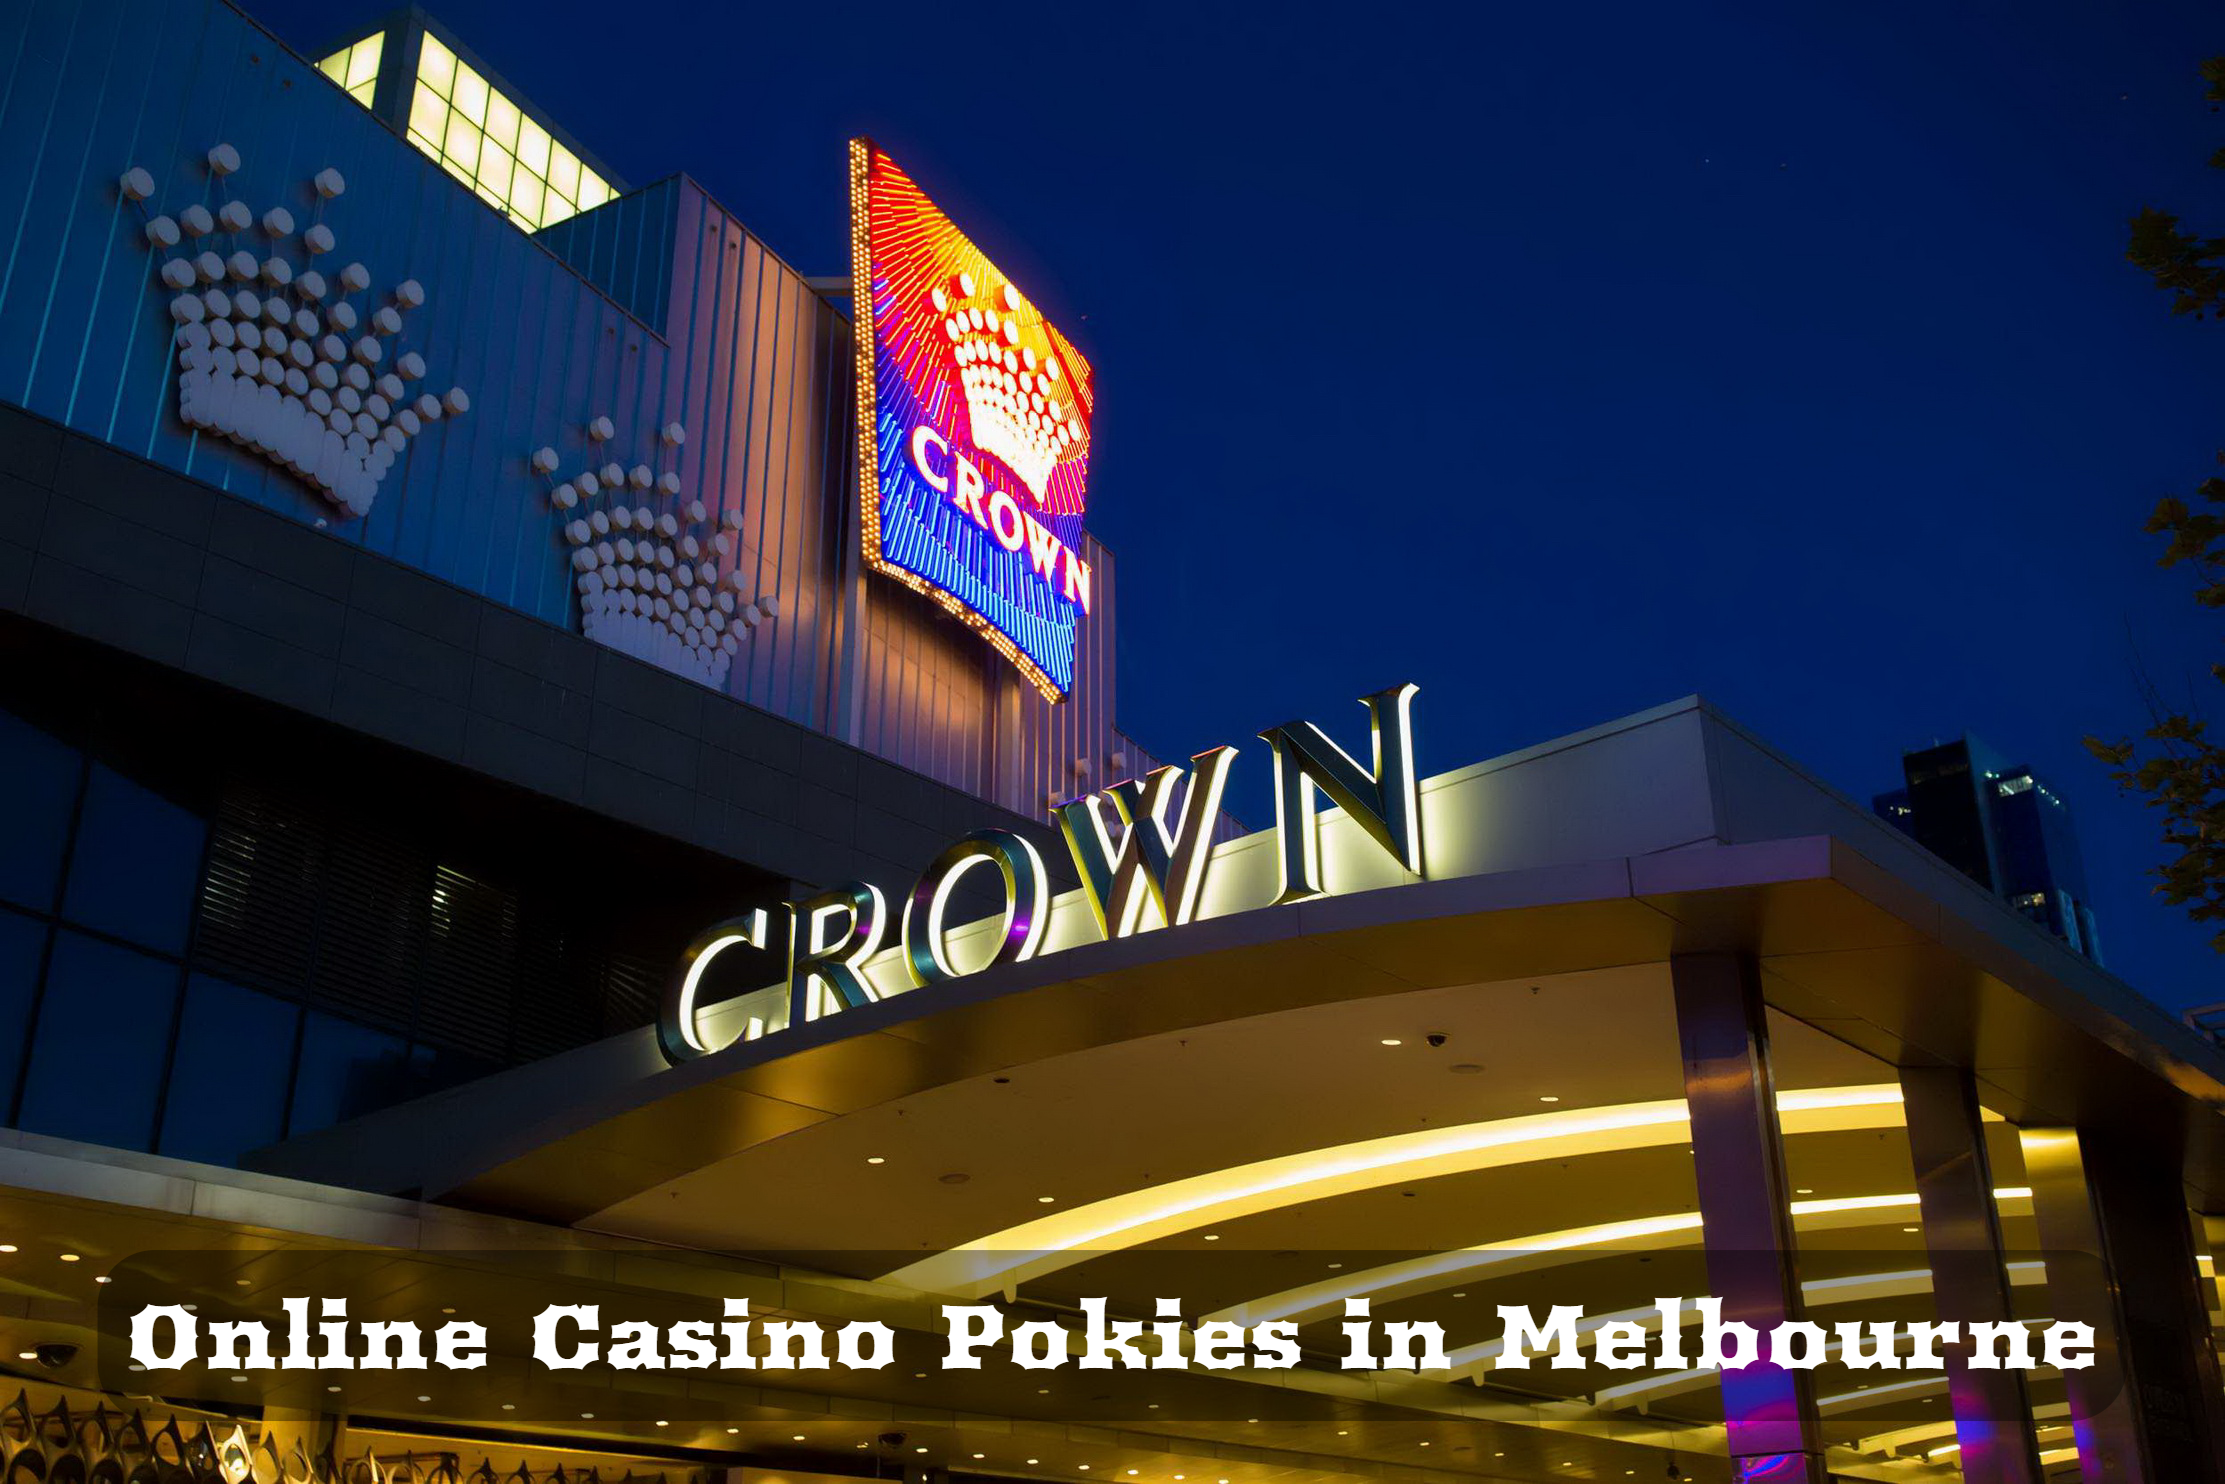 Online Casino Pokies in Melbourne